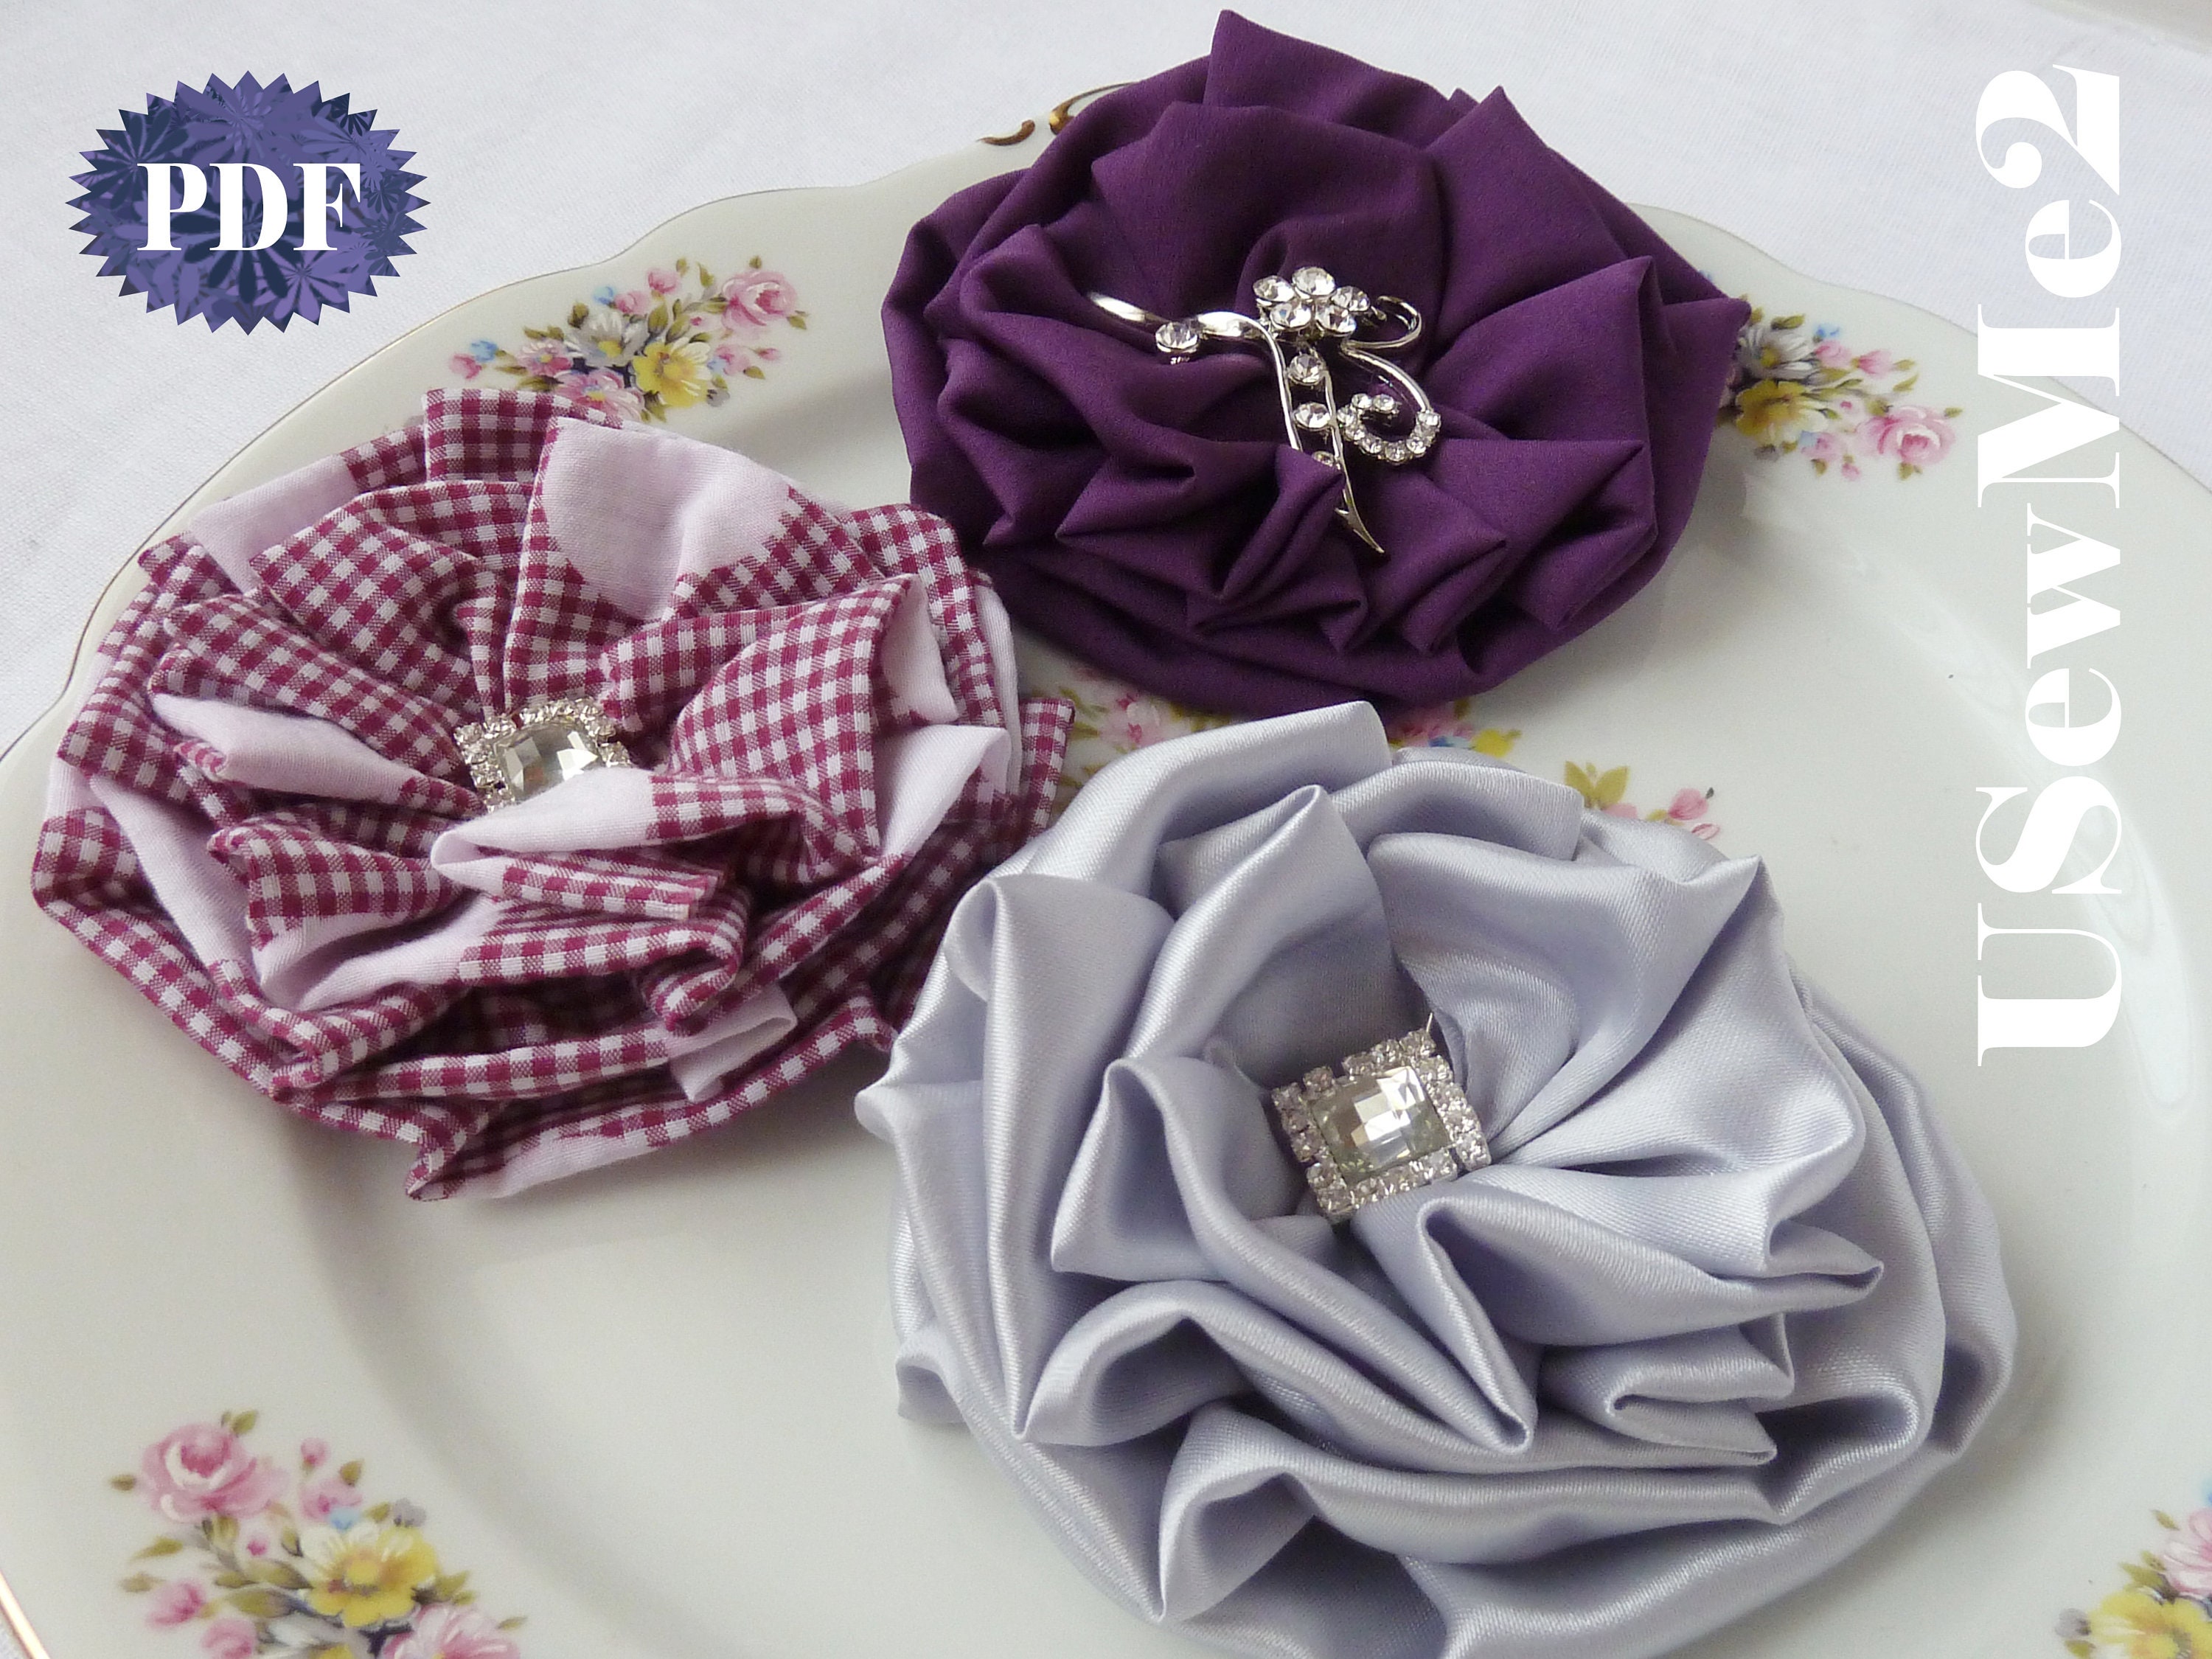 img.kwcdn.com/product/making-sewing-wedding-flower